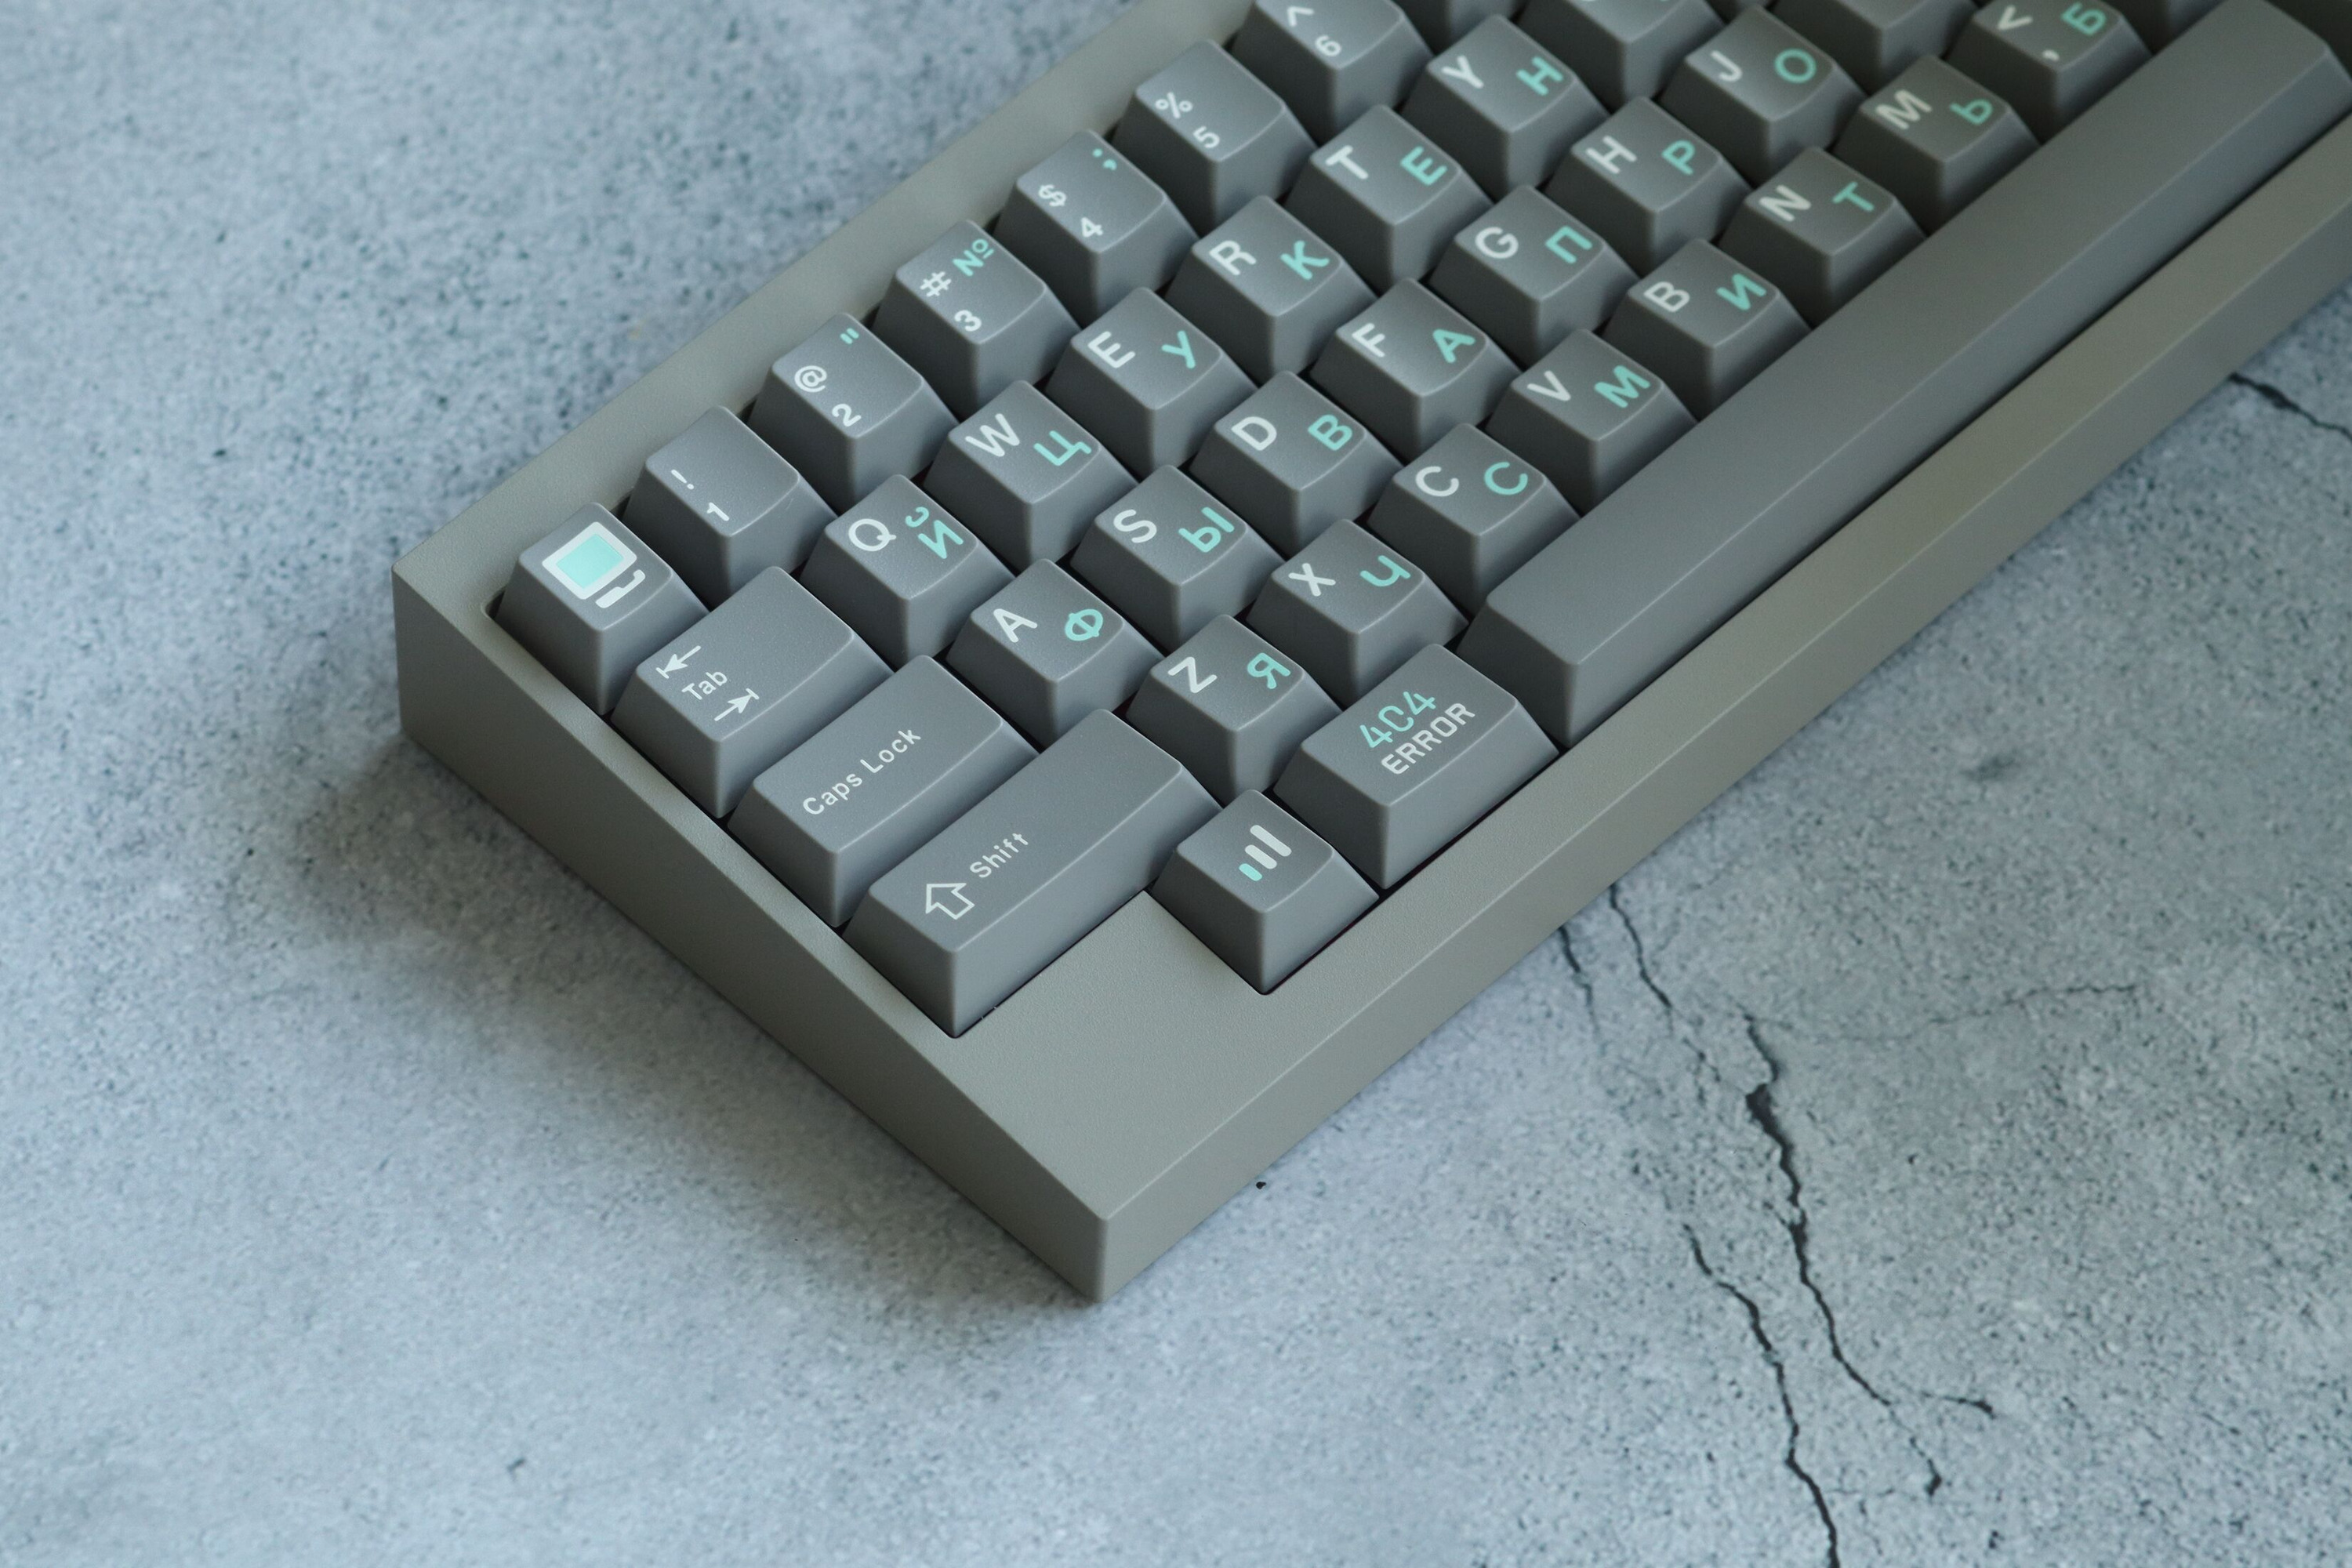 Tofu60 2.0 – KBDfans® Mechanical Keyboards Store